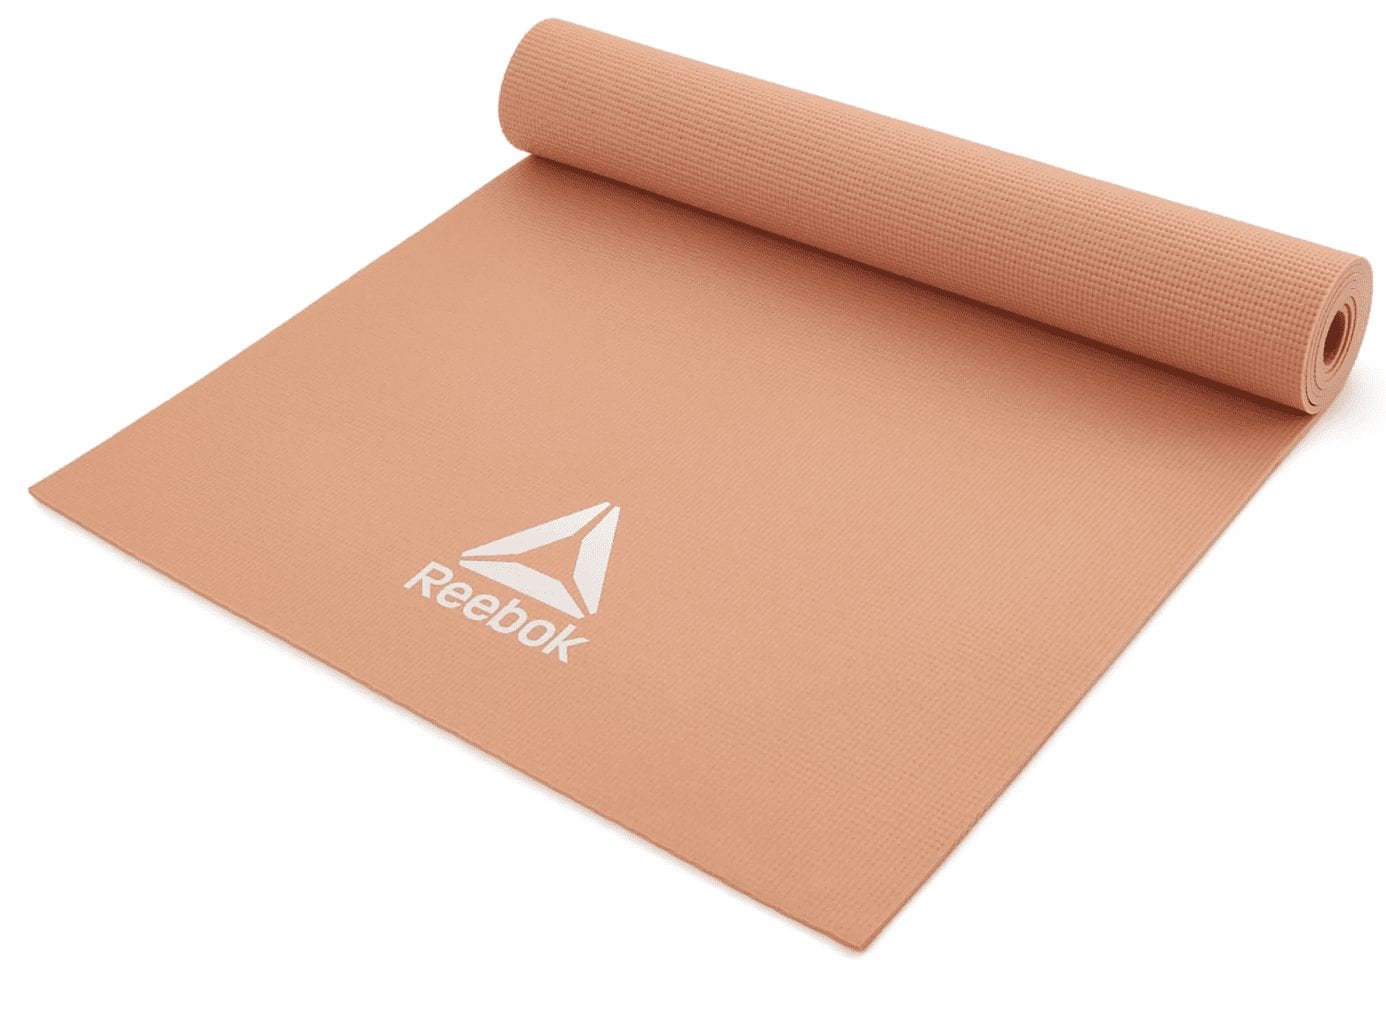 Rebook yoga mat, workout essentials for travel